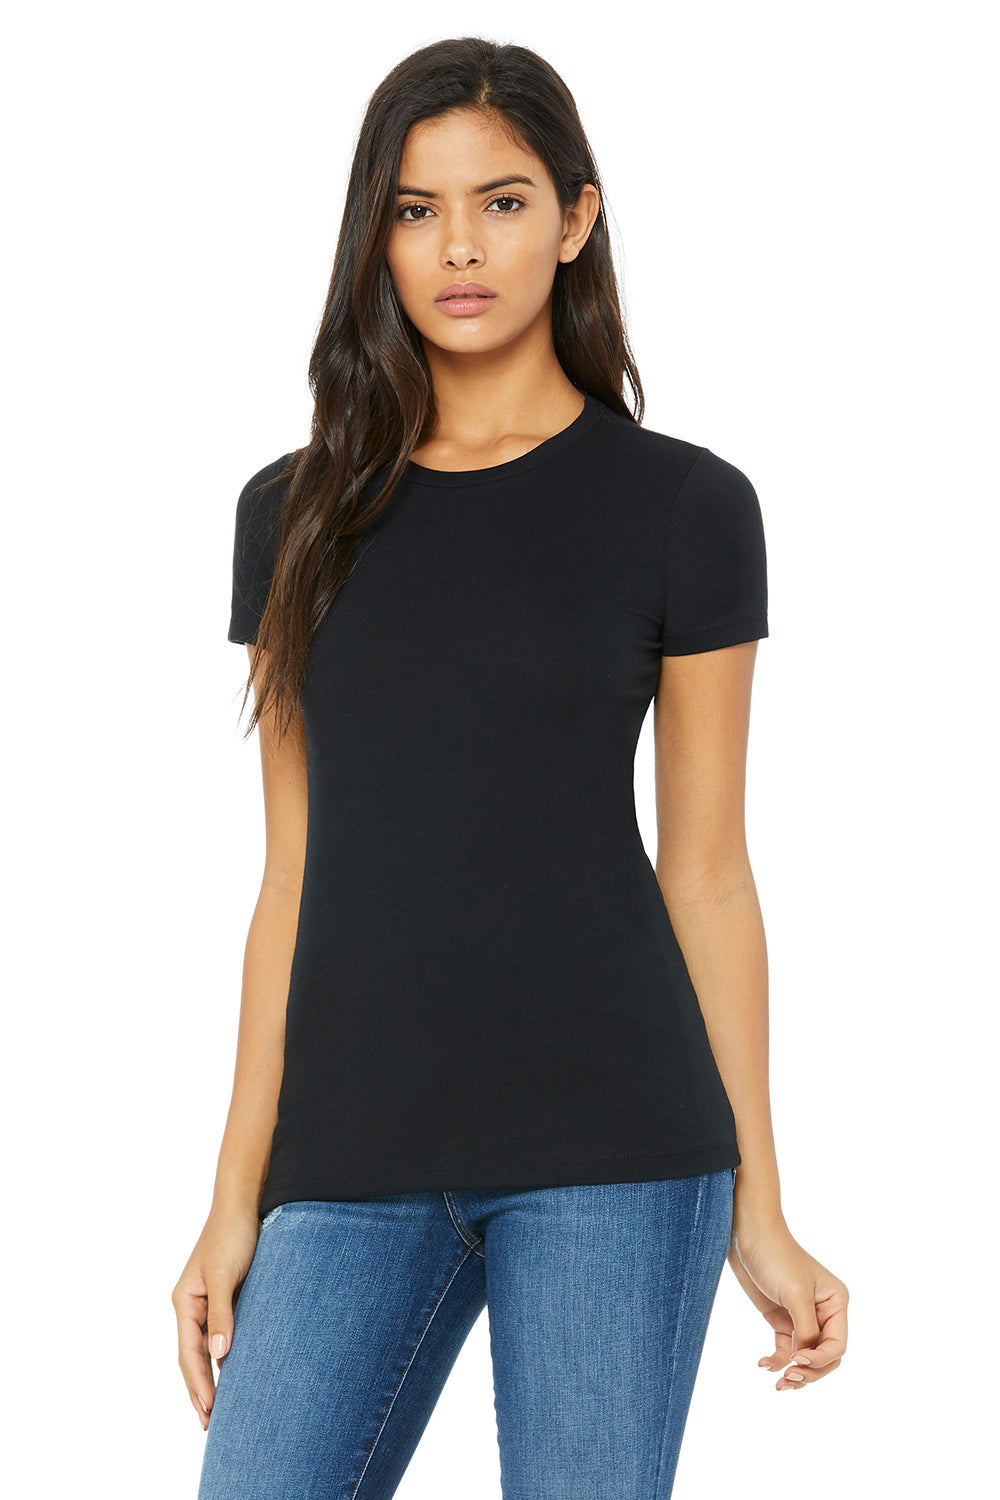 Bella + Canvas BC6004/6004 Womens The Favorite Short Sleeve Crewneck T-Shirt Solid Black Model Front